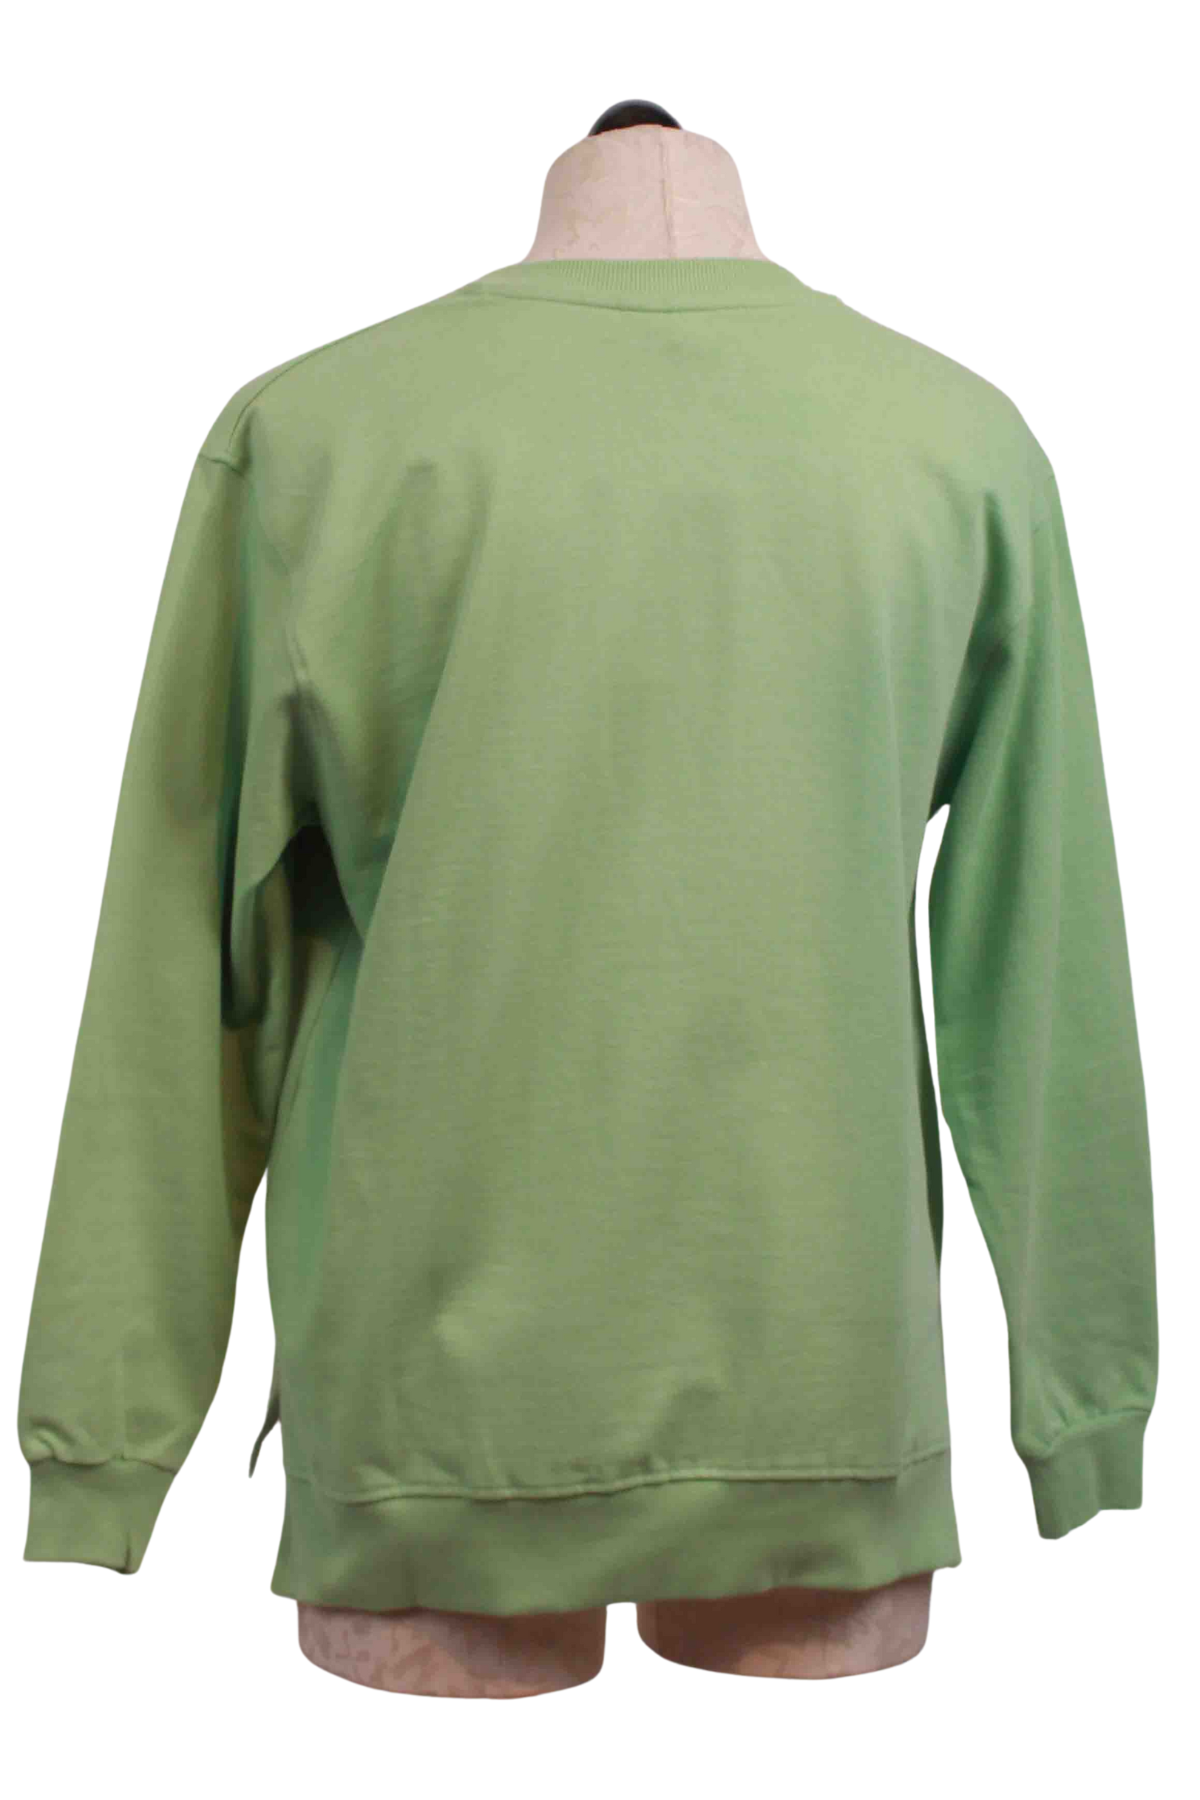 back view of Green Oversized Lemon Applique Sweatshirt by Compania Fantastica